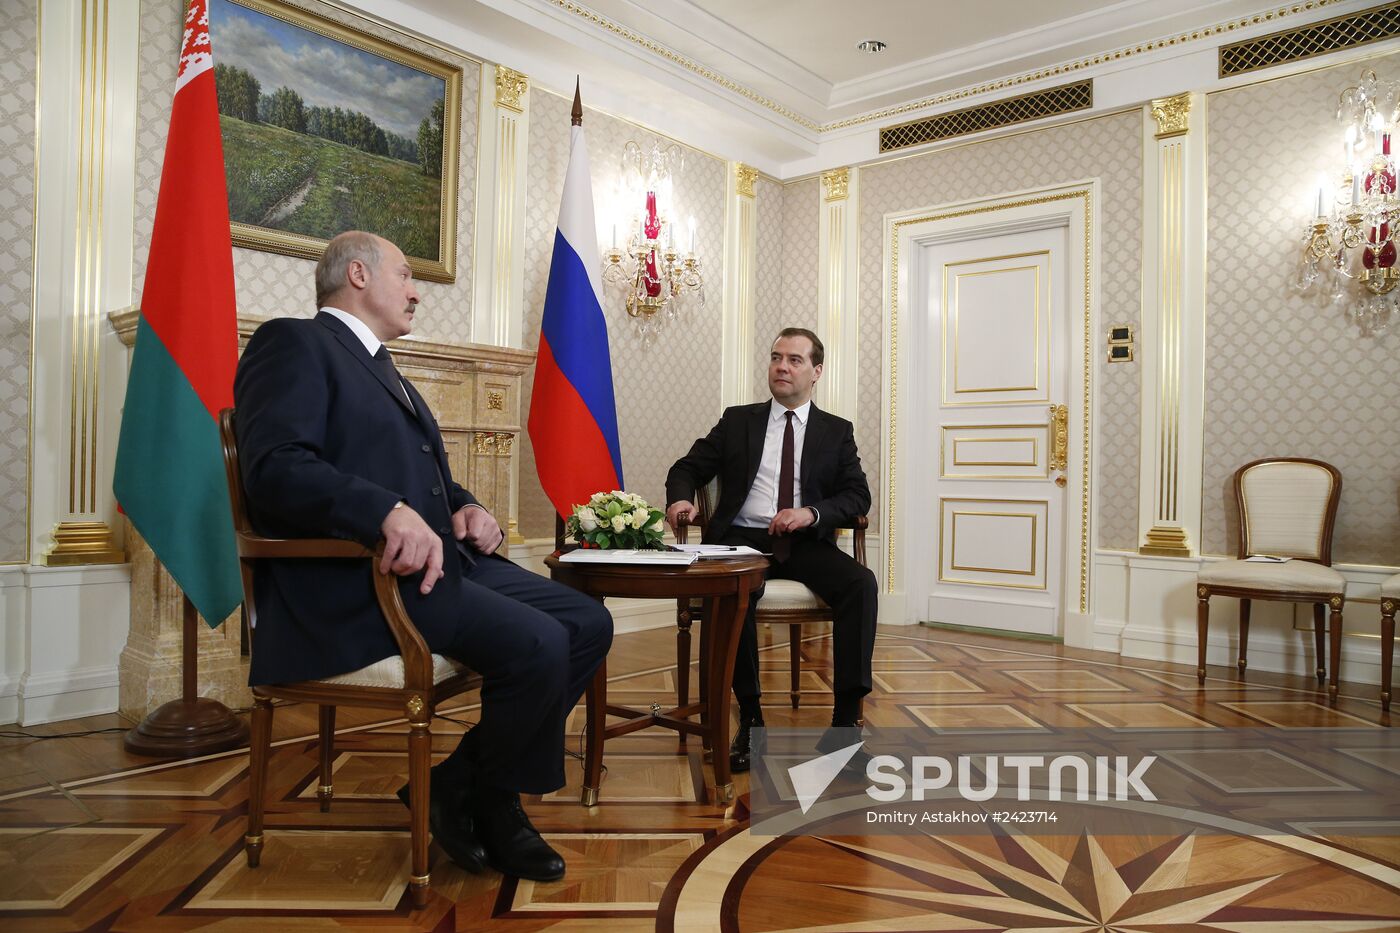 Dmitry Medvedev meets with Alexander Lukashenko